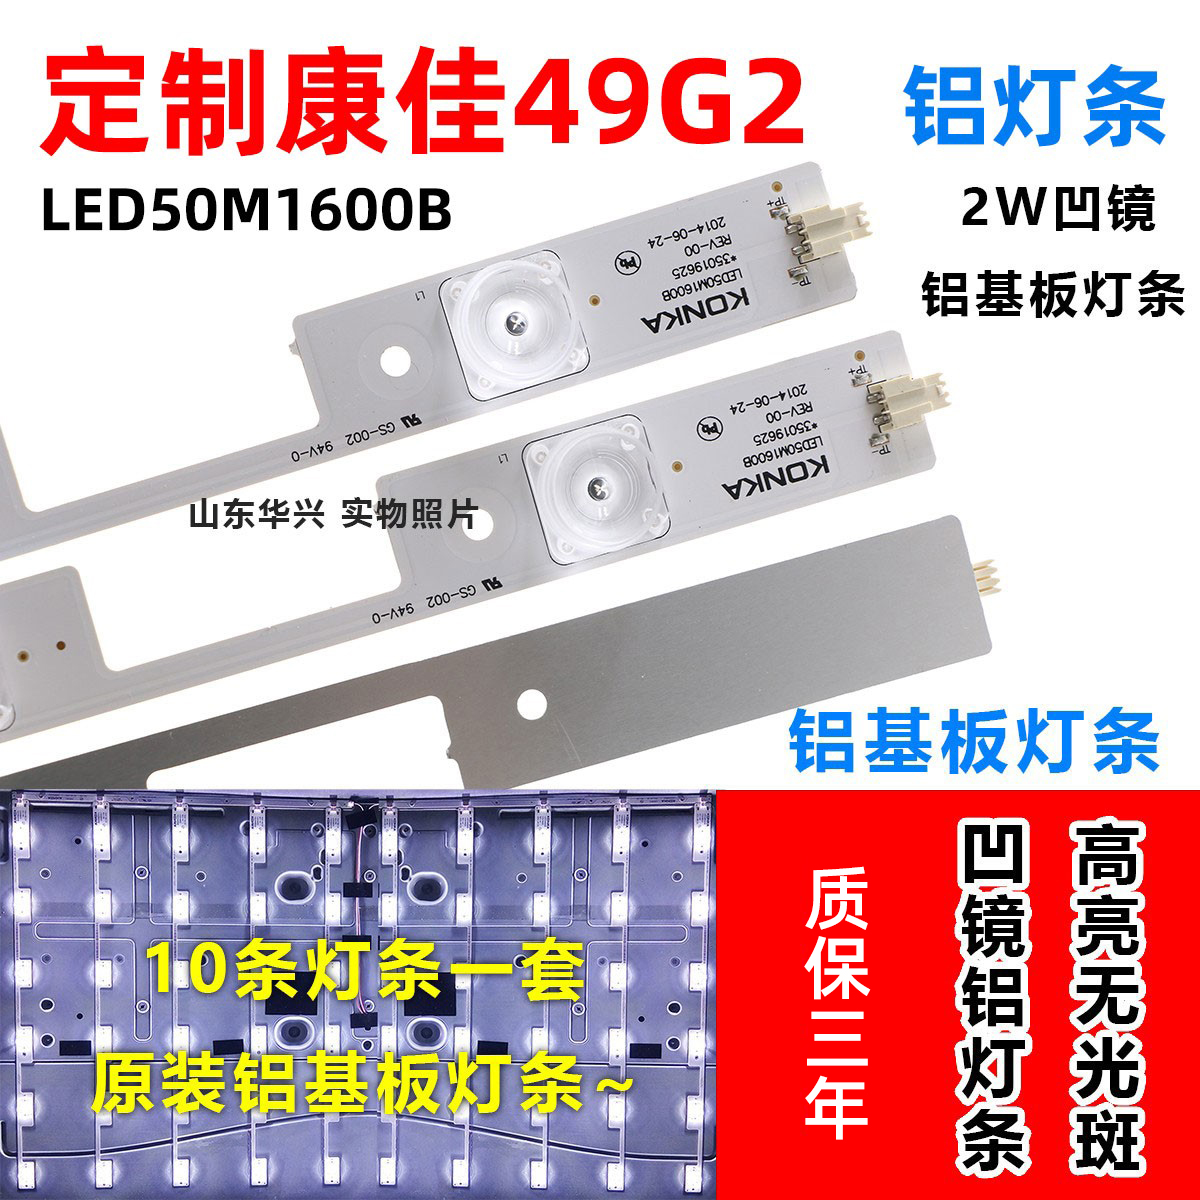 鲁至适用康佳LED50X1800A LED50M1600B LED49G2灯条液晶电视LED